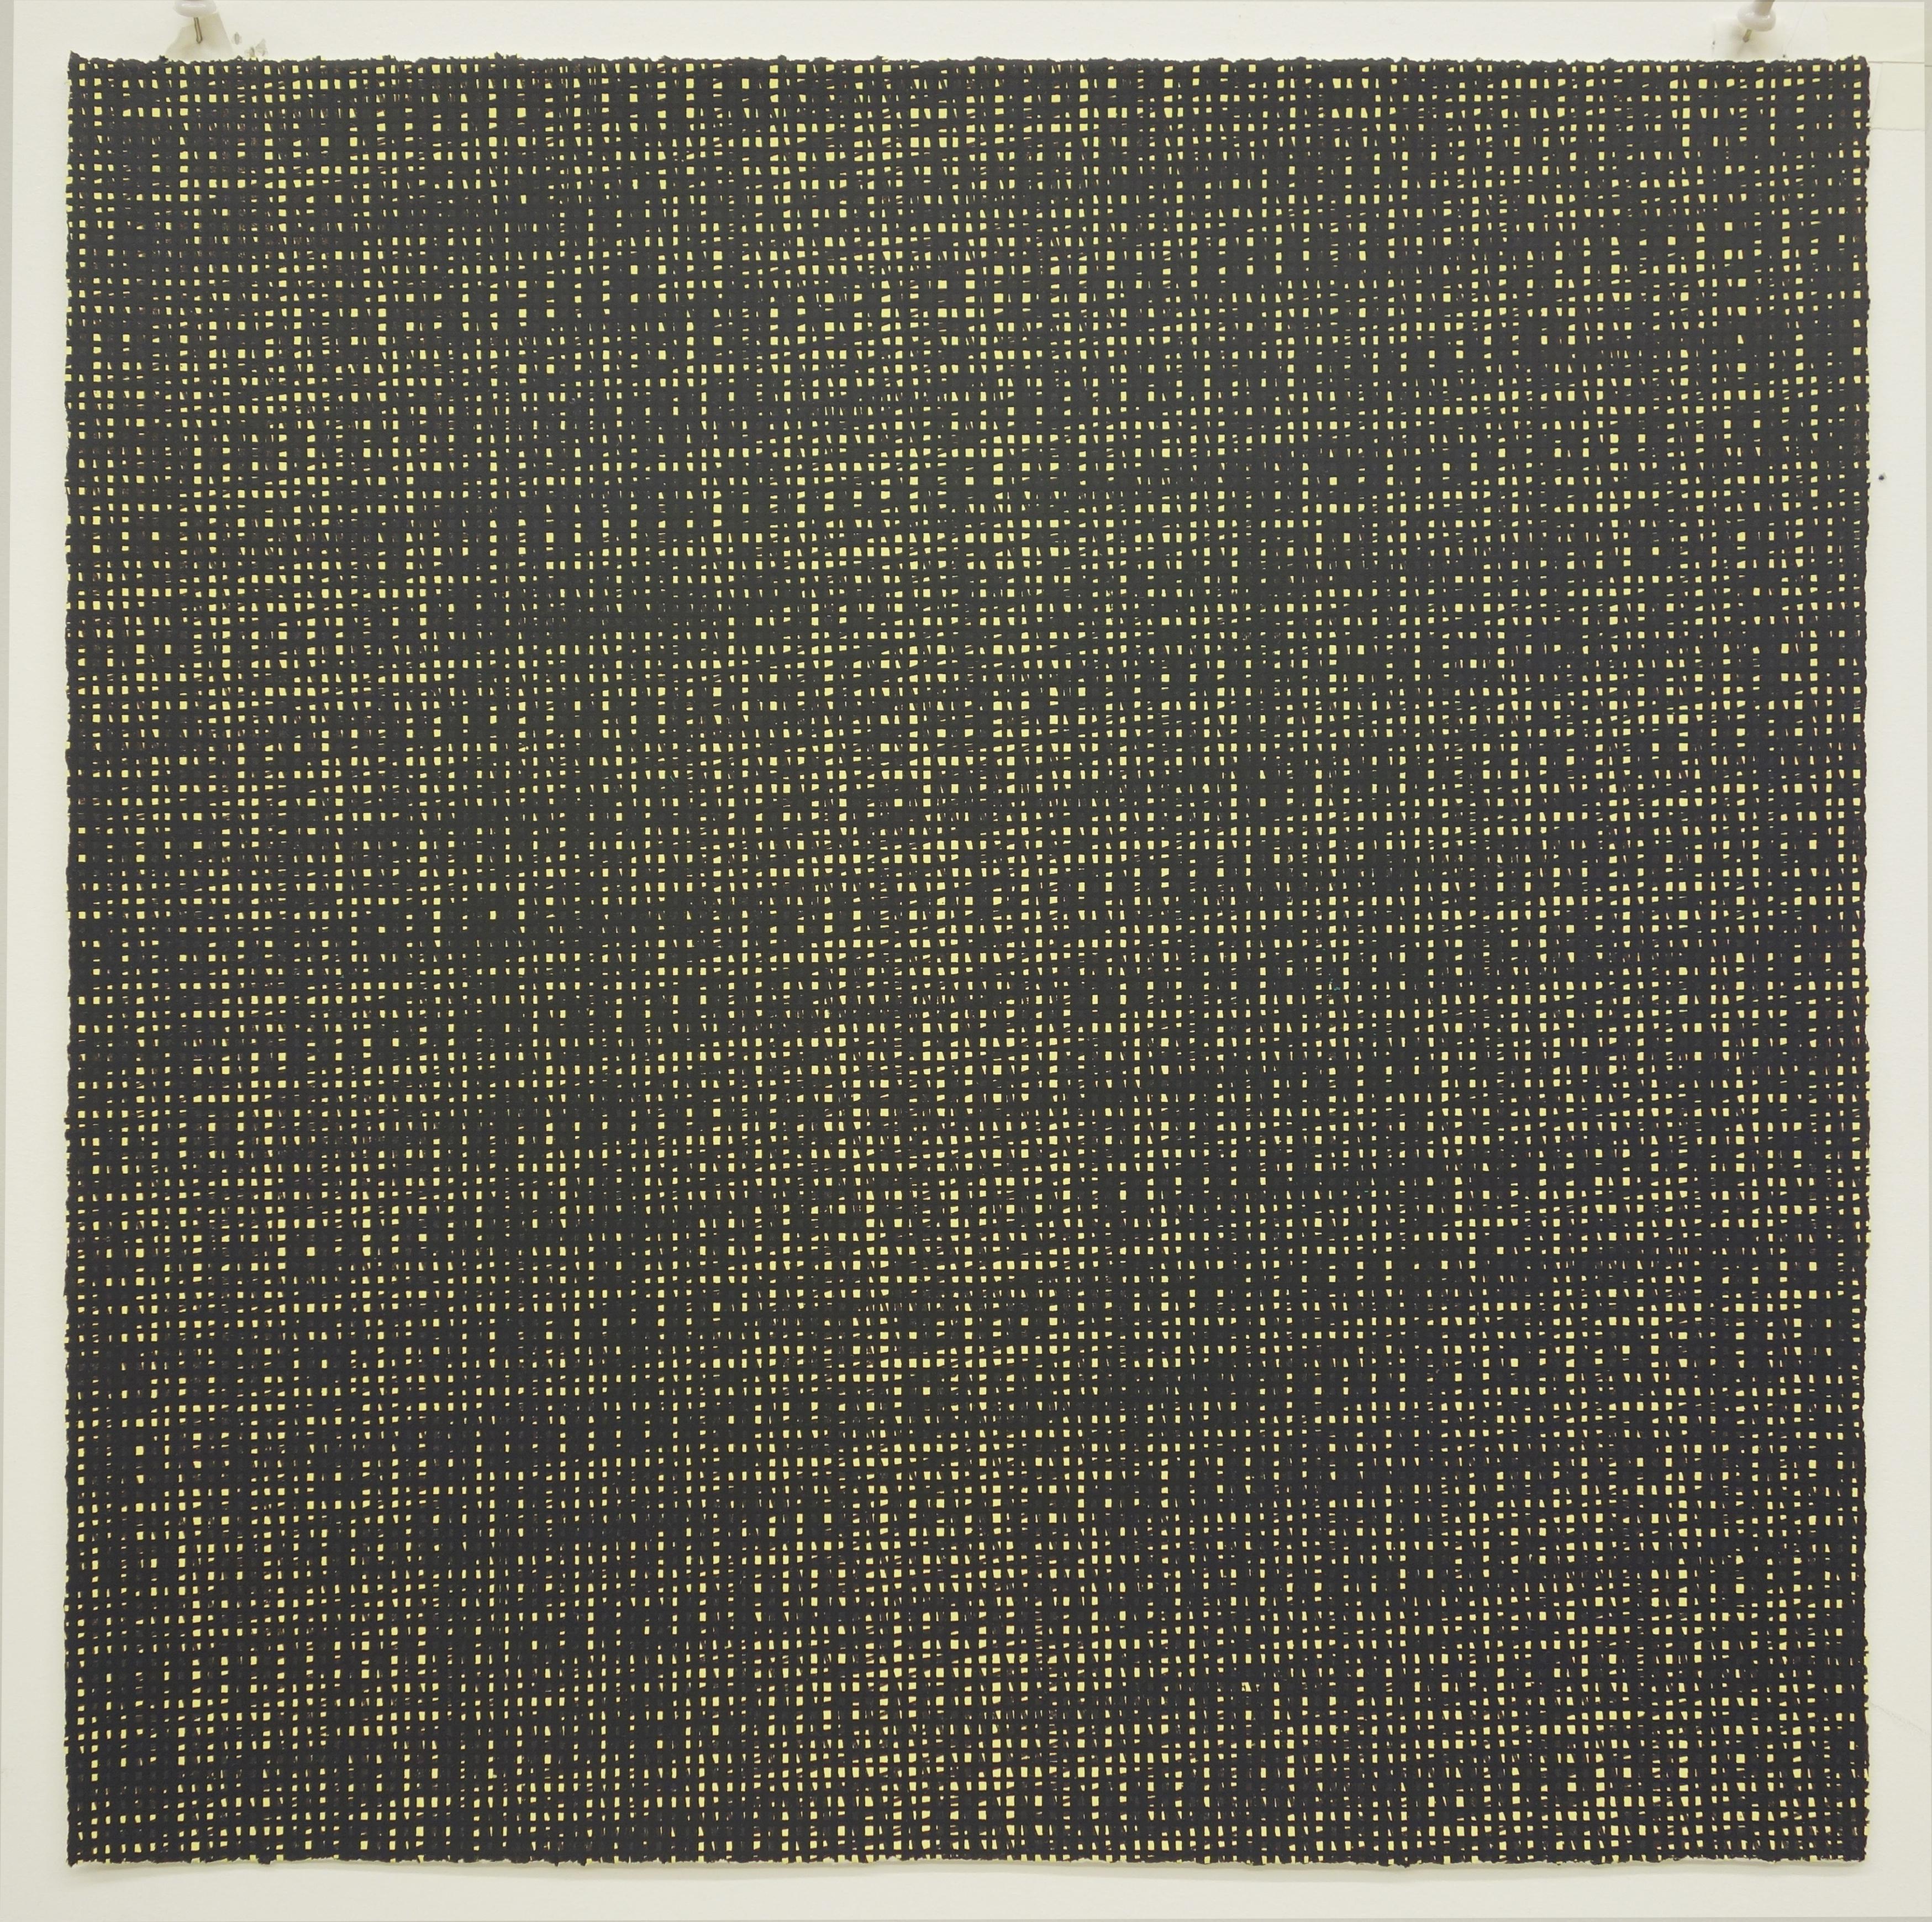 Rob de Oude, Untitled-Wassaic 2, 2016, silkscreen, 18 x 18 inches, Suite of 10 7